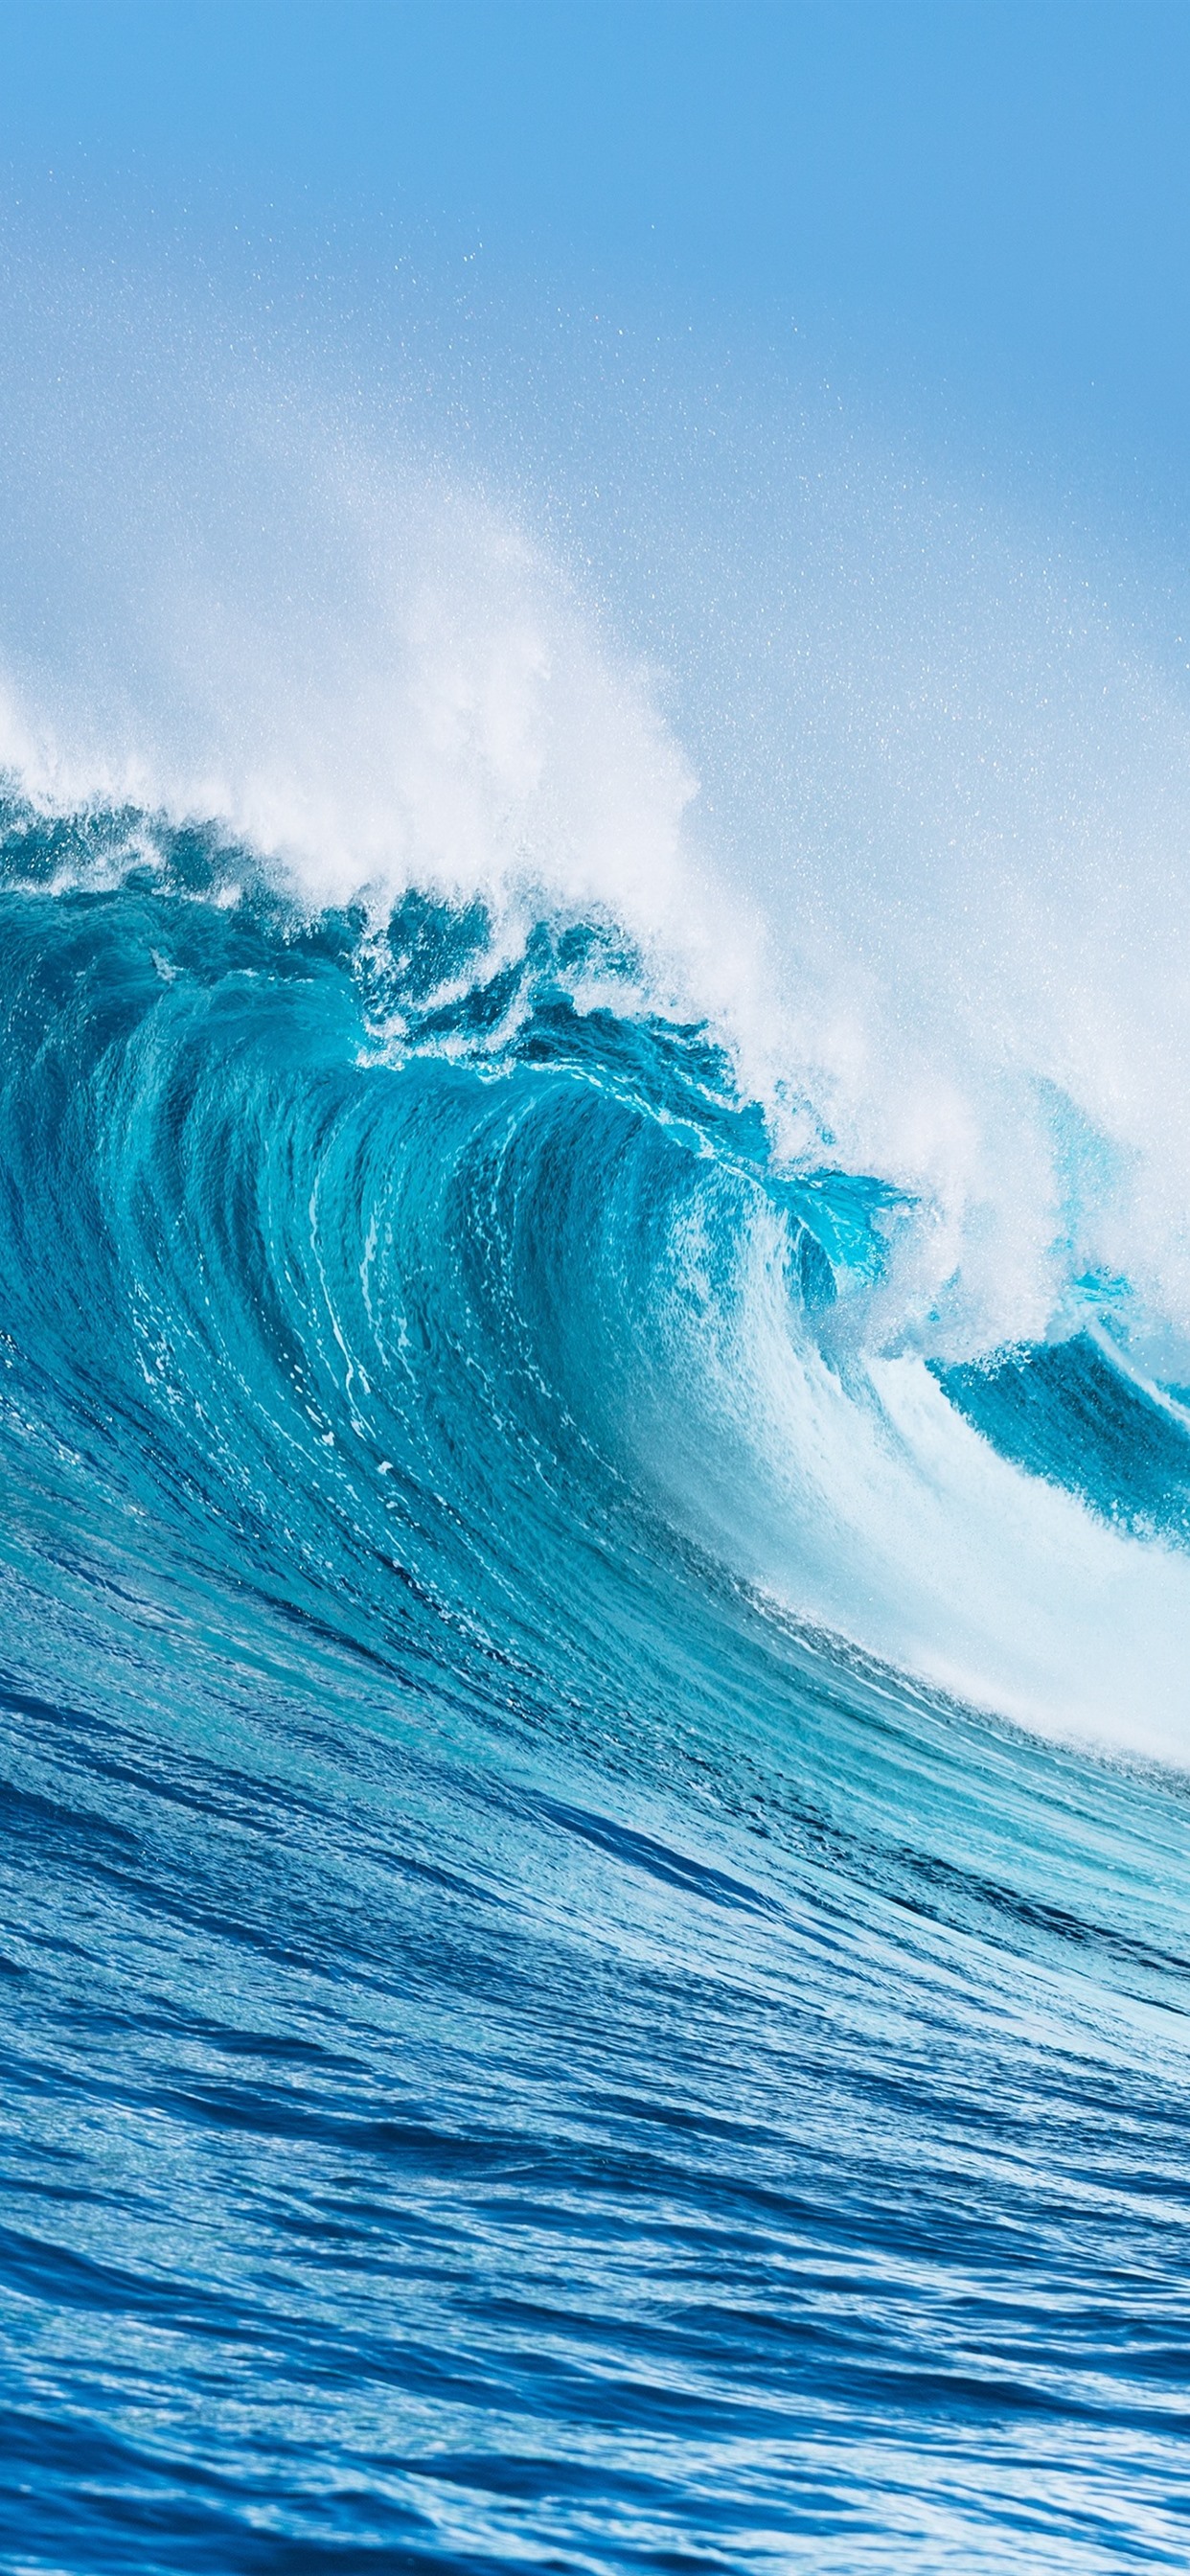 Iphone Wallpaper Sea Wave Rolls Water Splash 1242x2688 Wallpaper Teahub Io